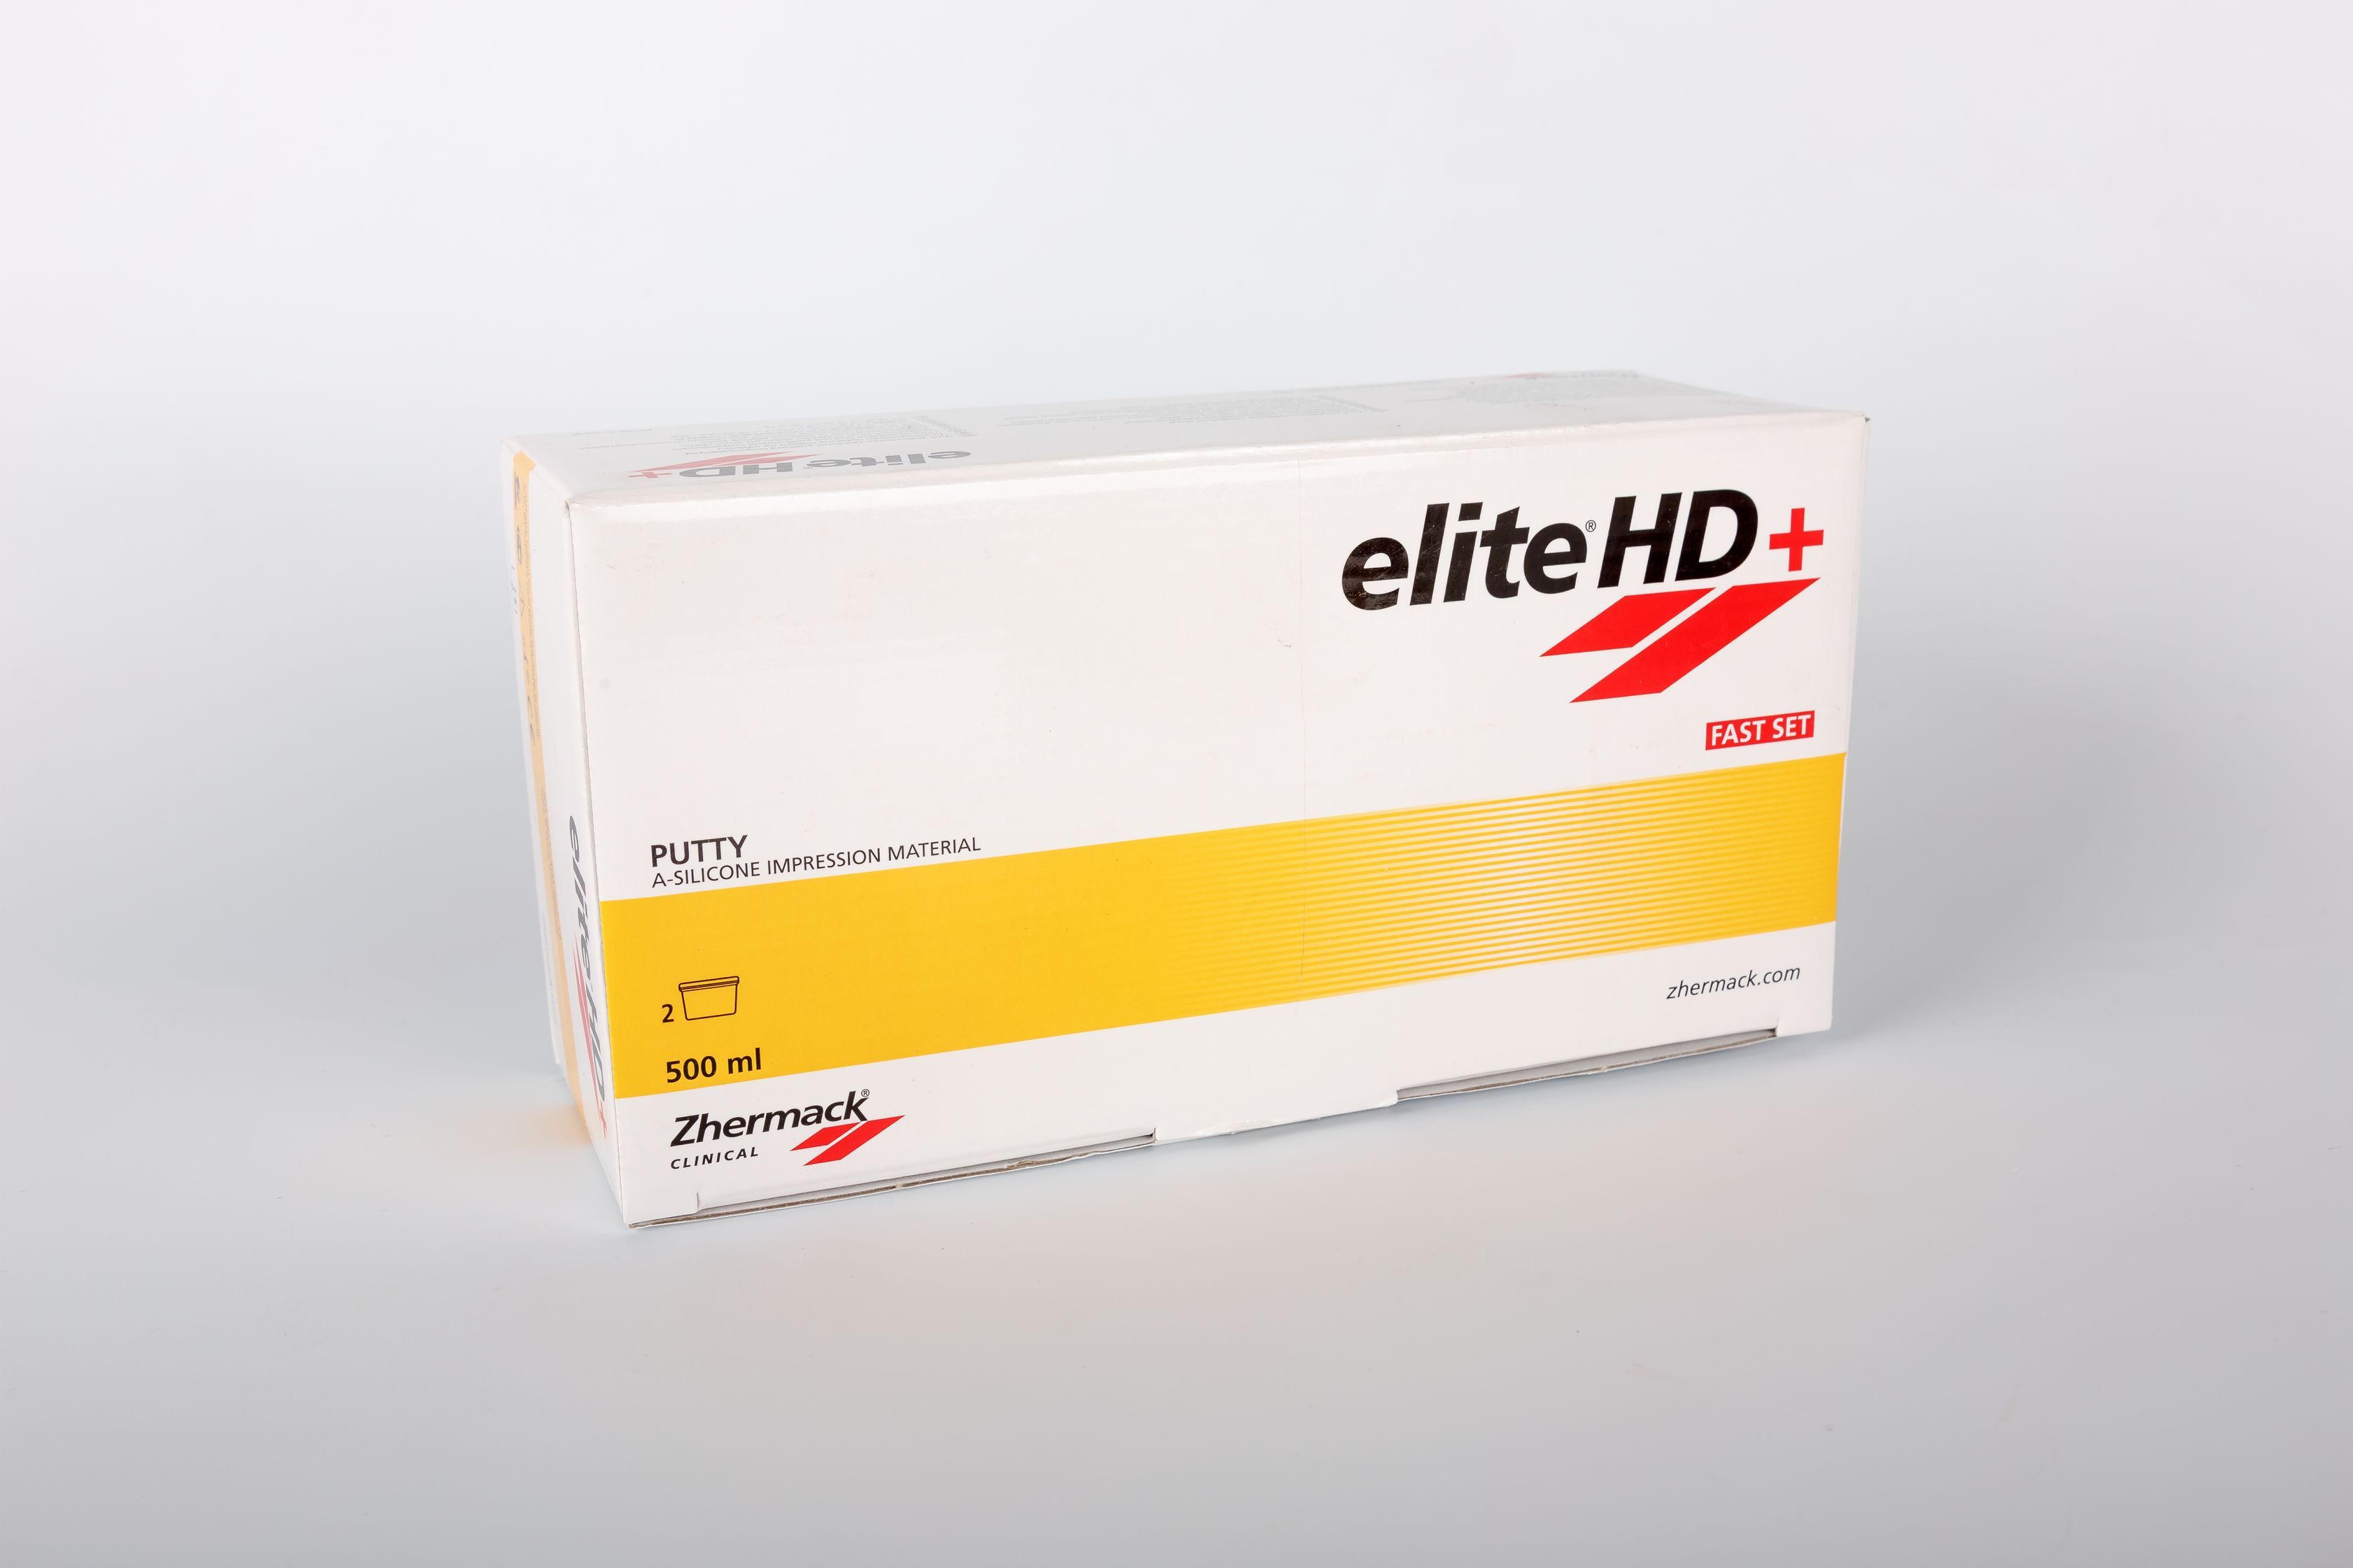 Elite HD+ Putty Soft Fast Set (2*250) желт. (арт.С203010)